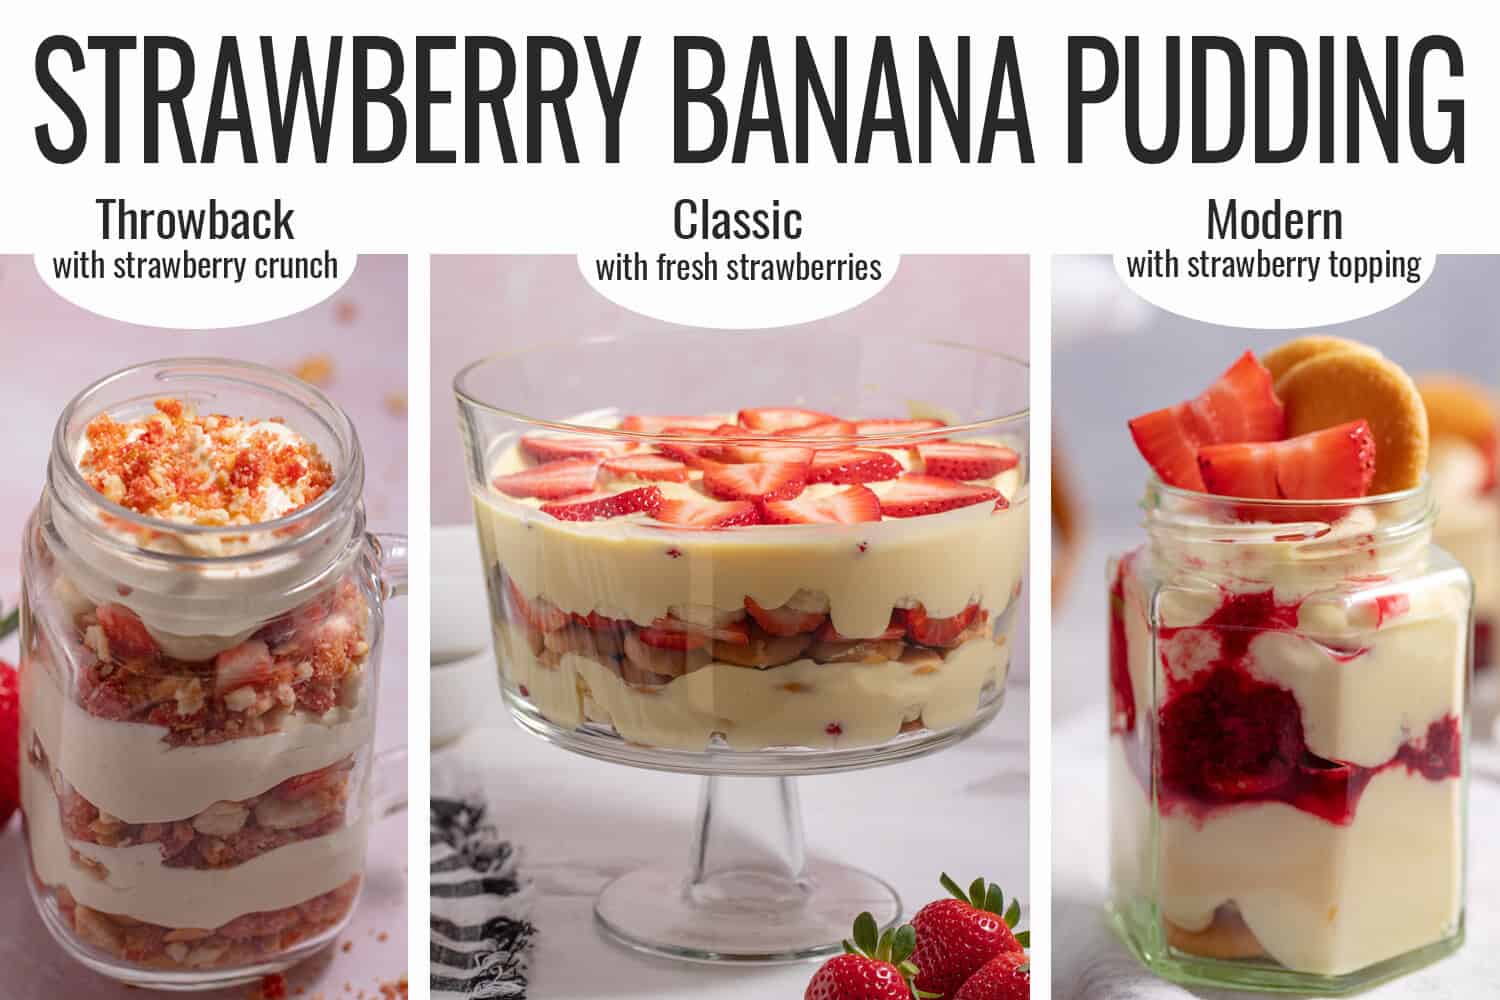 3 types of strawberry banana pudding recipes